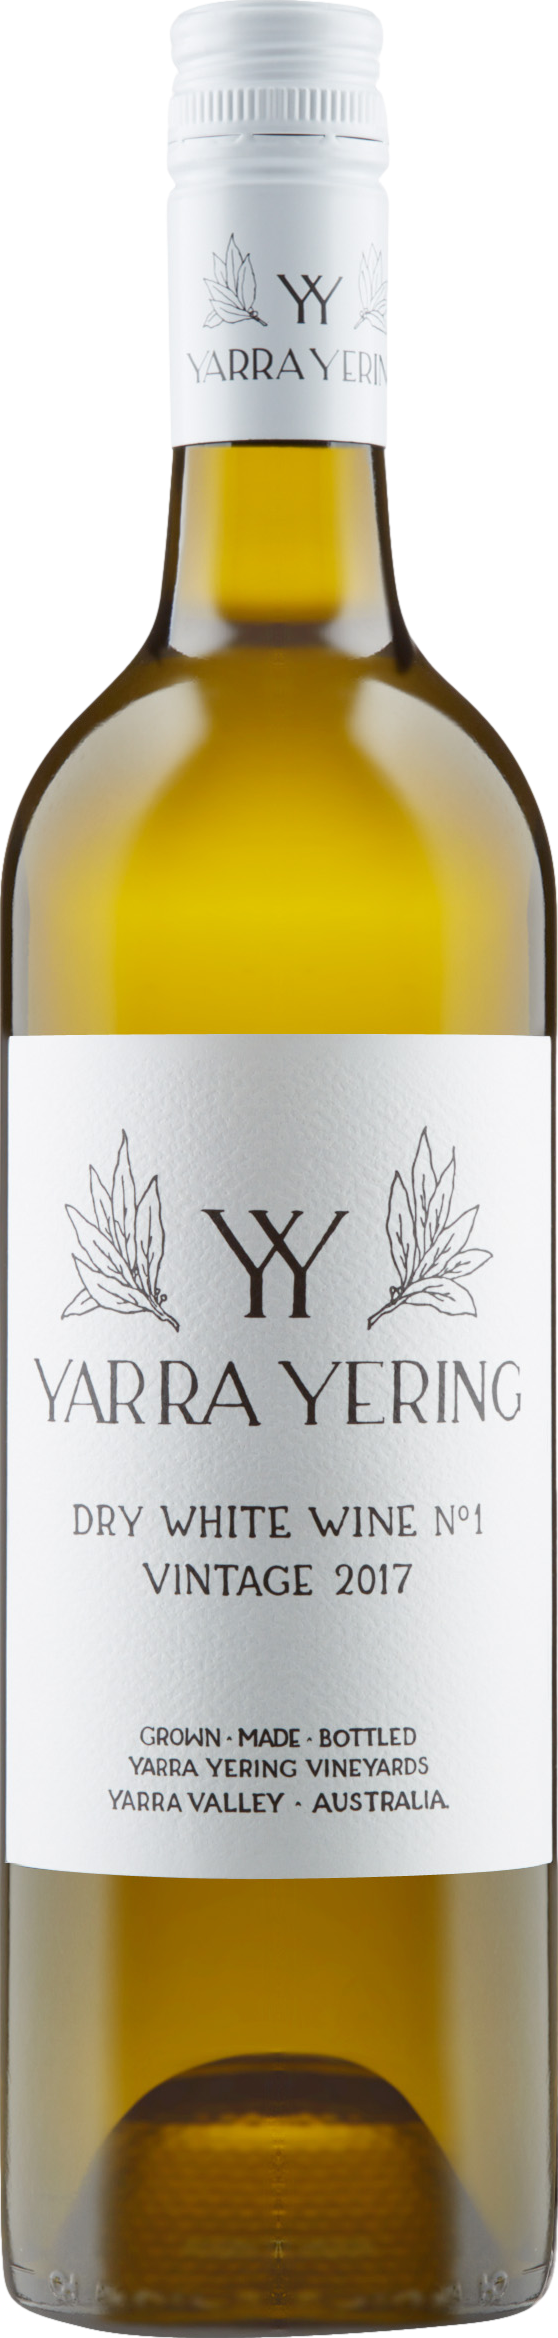 Yarra Yering Dry White No 1 2018 Yarra Yering 8wines DACH